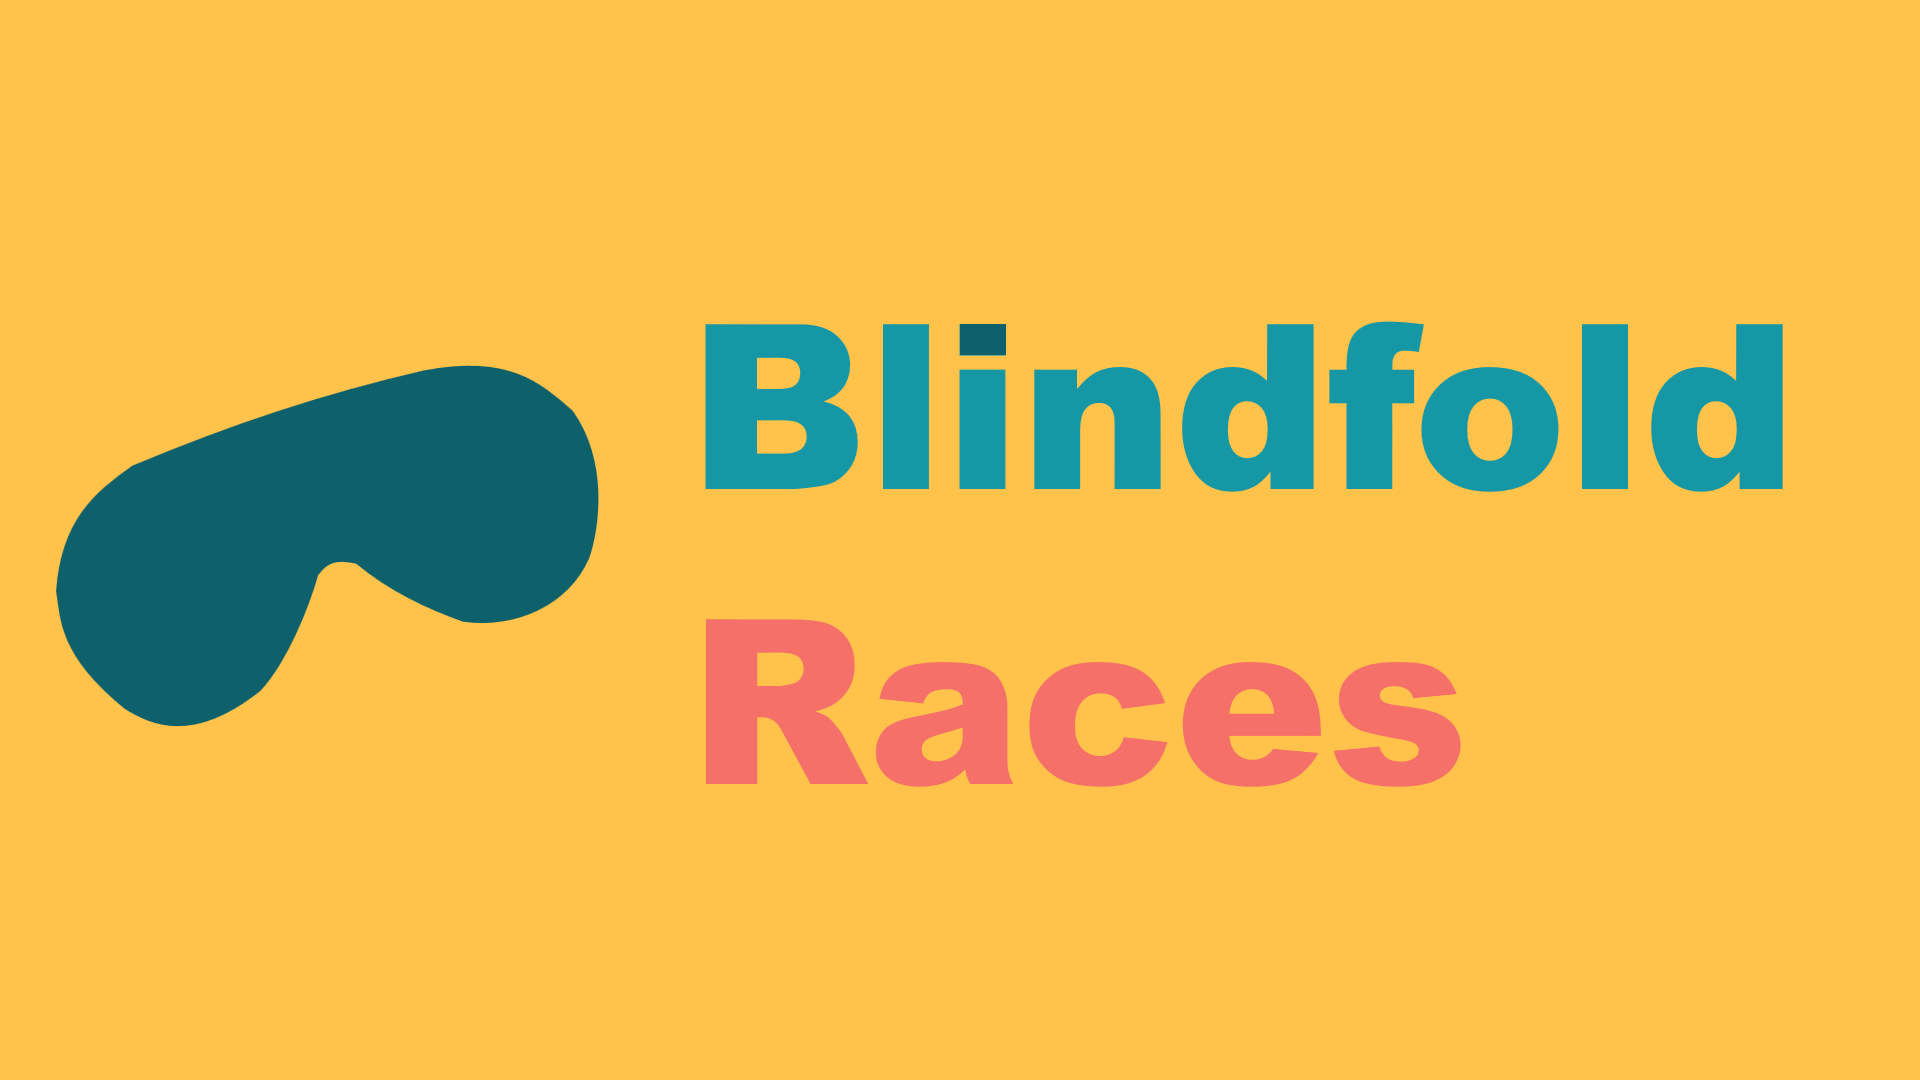 Blindfold Race